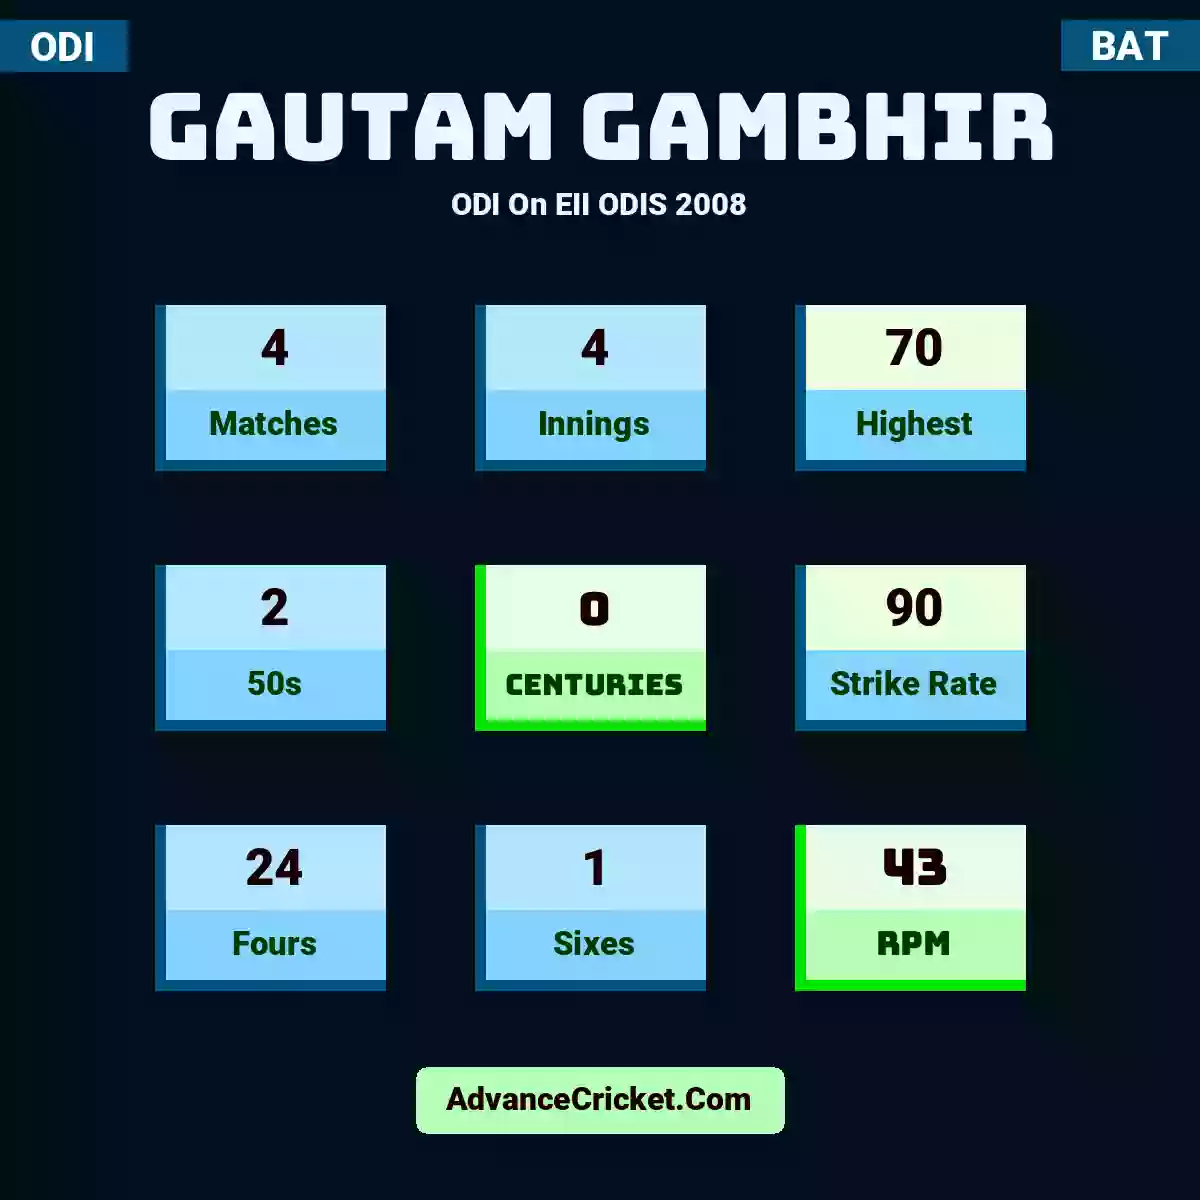 Gautam Gambhir ODI  On EII ODIS 2008, Gautam Gambhir played 4 matches, scored 70 runs as highest, 2 half-centuries, and 0 centuries, with a strike rate of 90. G.Gambhir hit 24 fours and 1 sixes, with an RPM of 43.